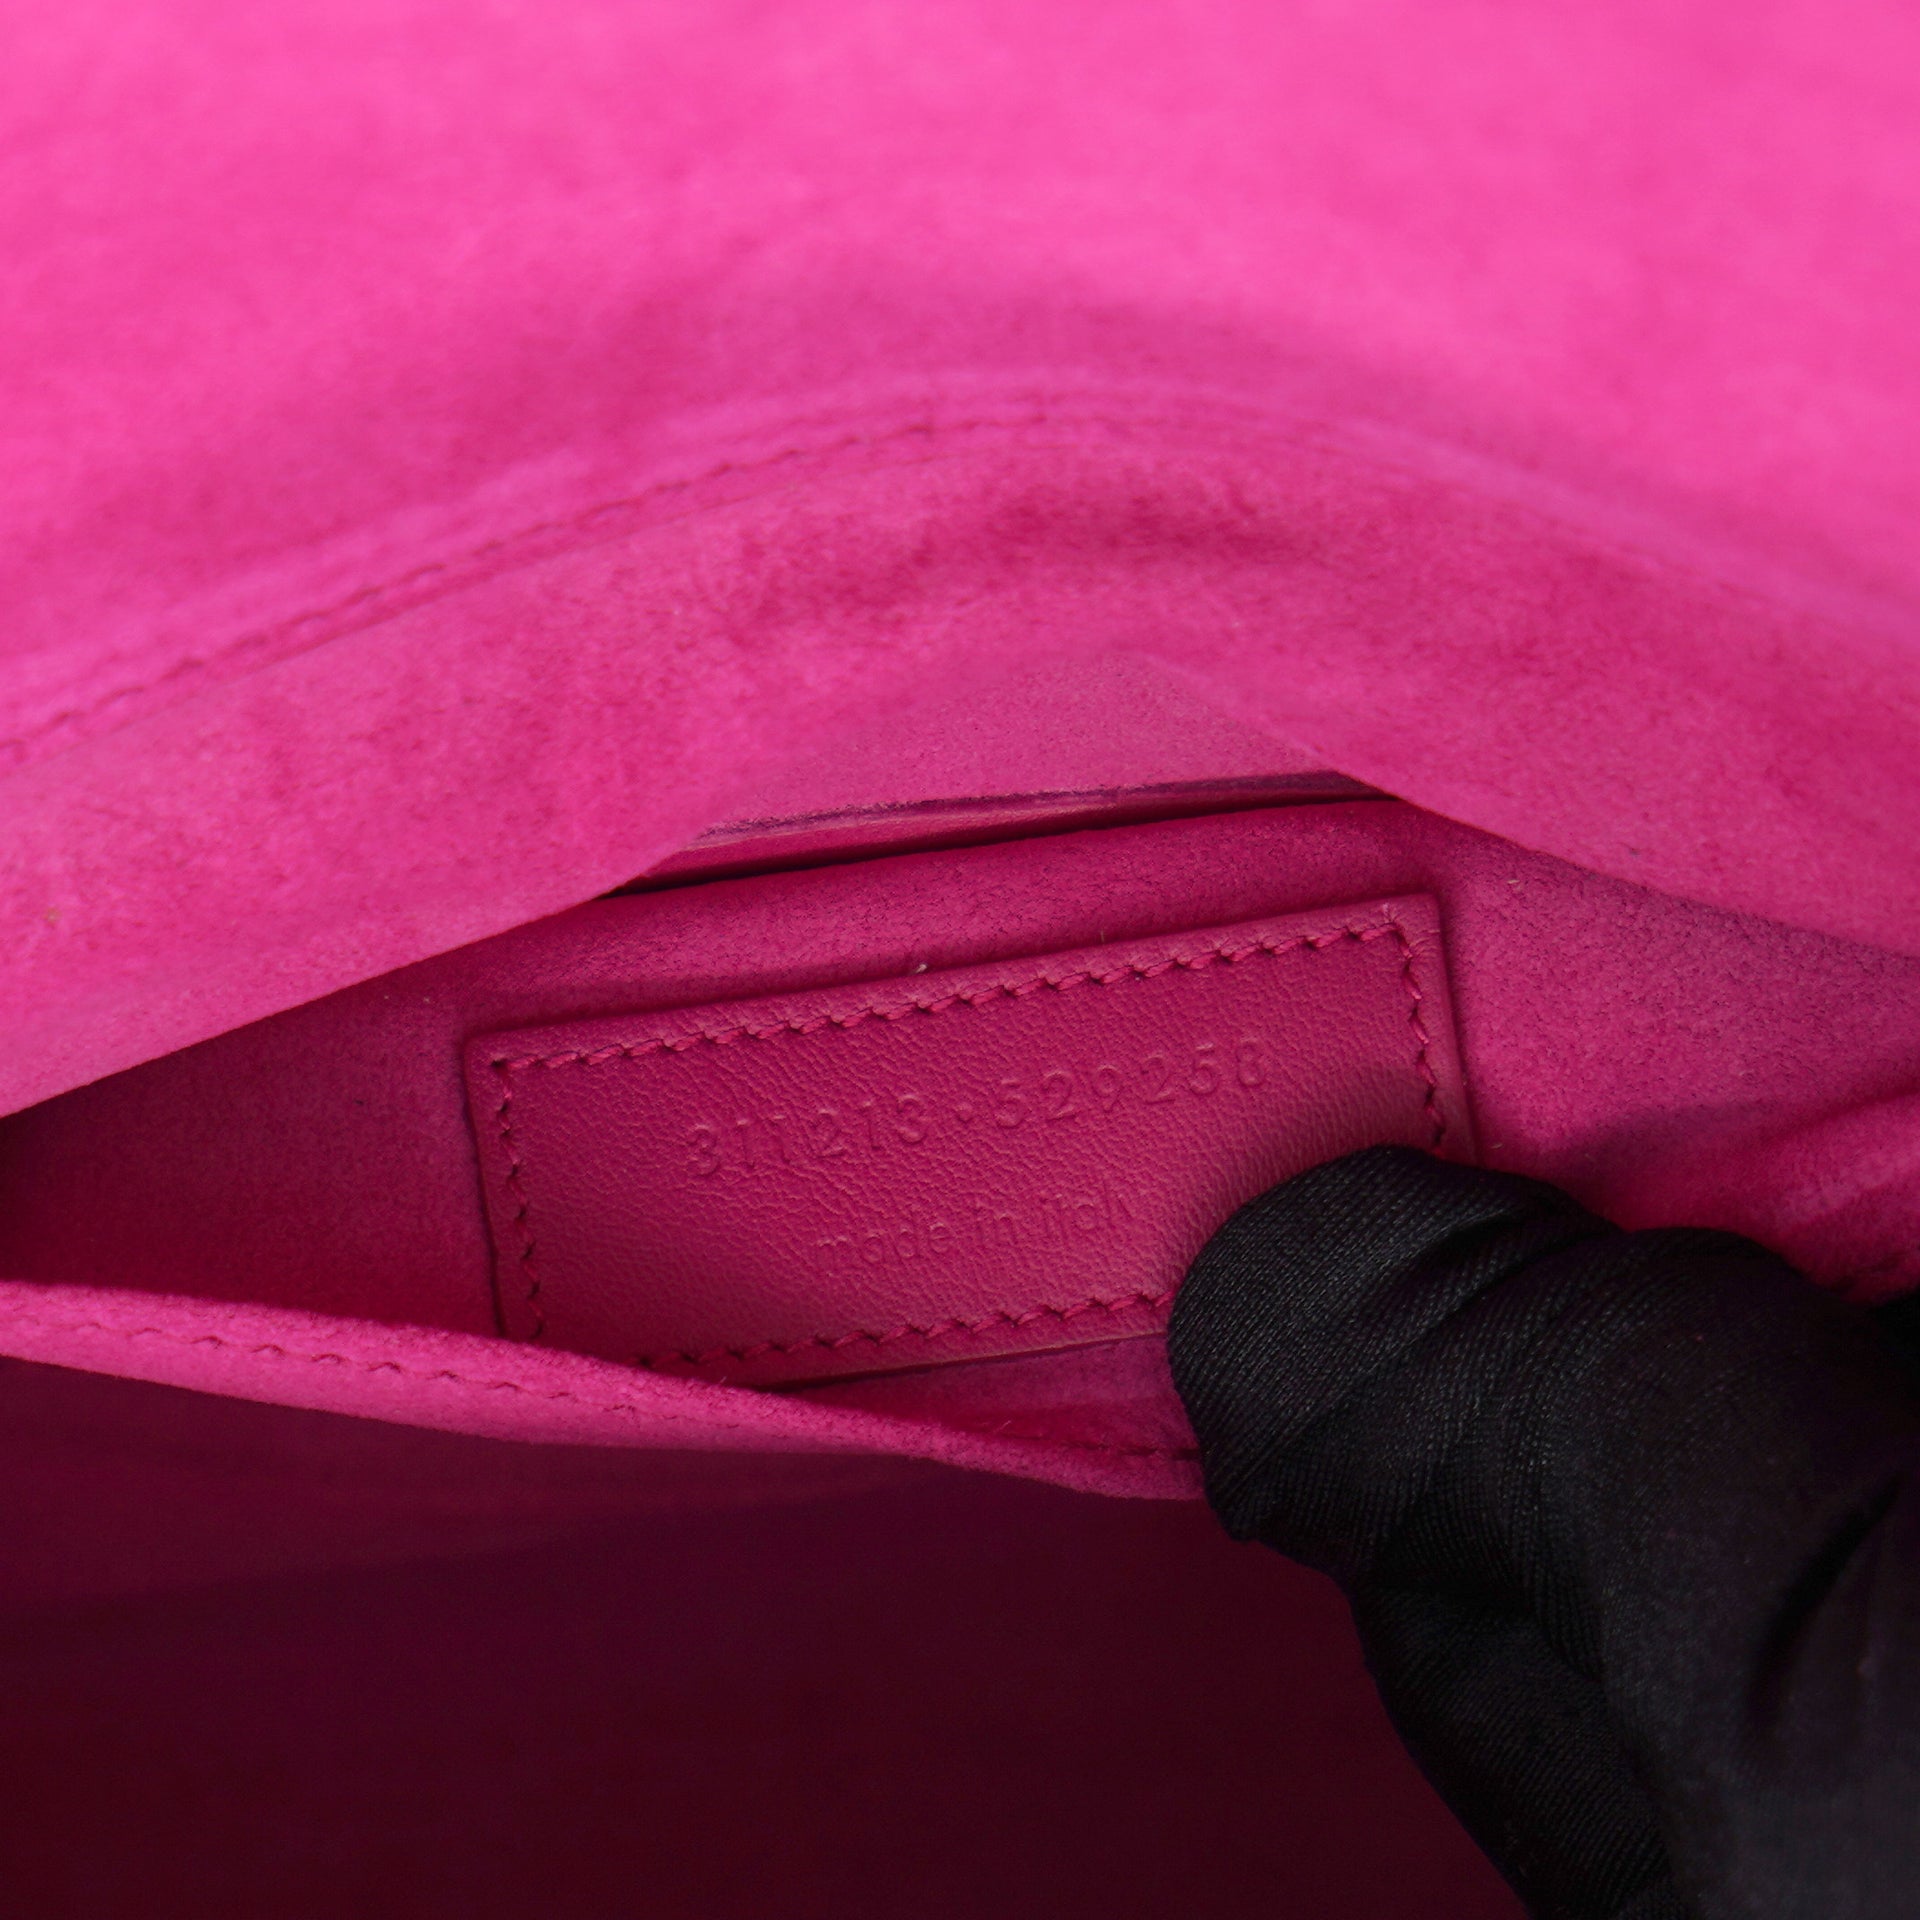 Hot Pink Leather Y-Ligne Clutch